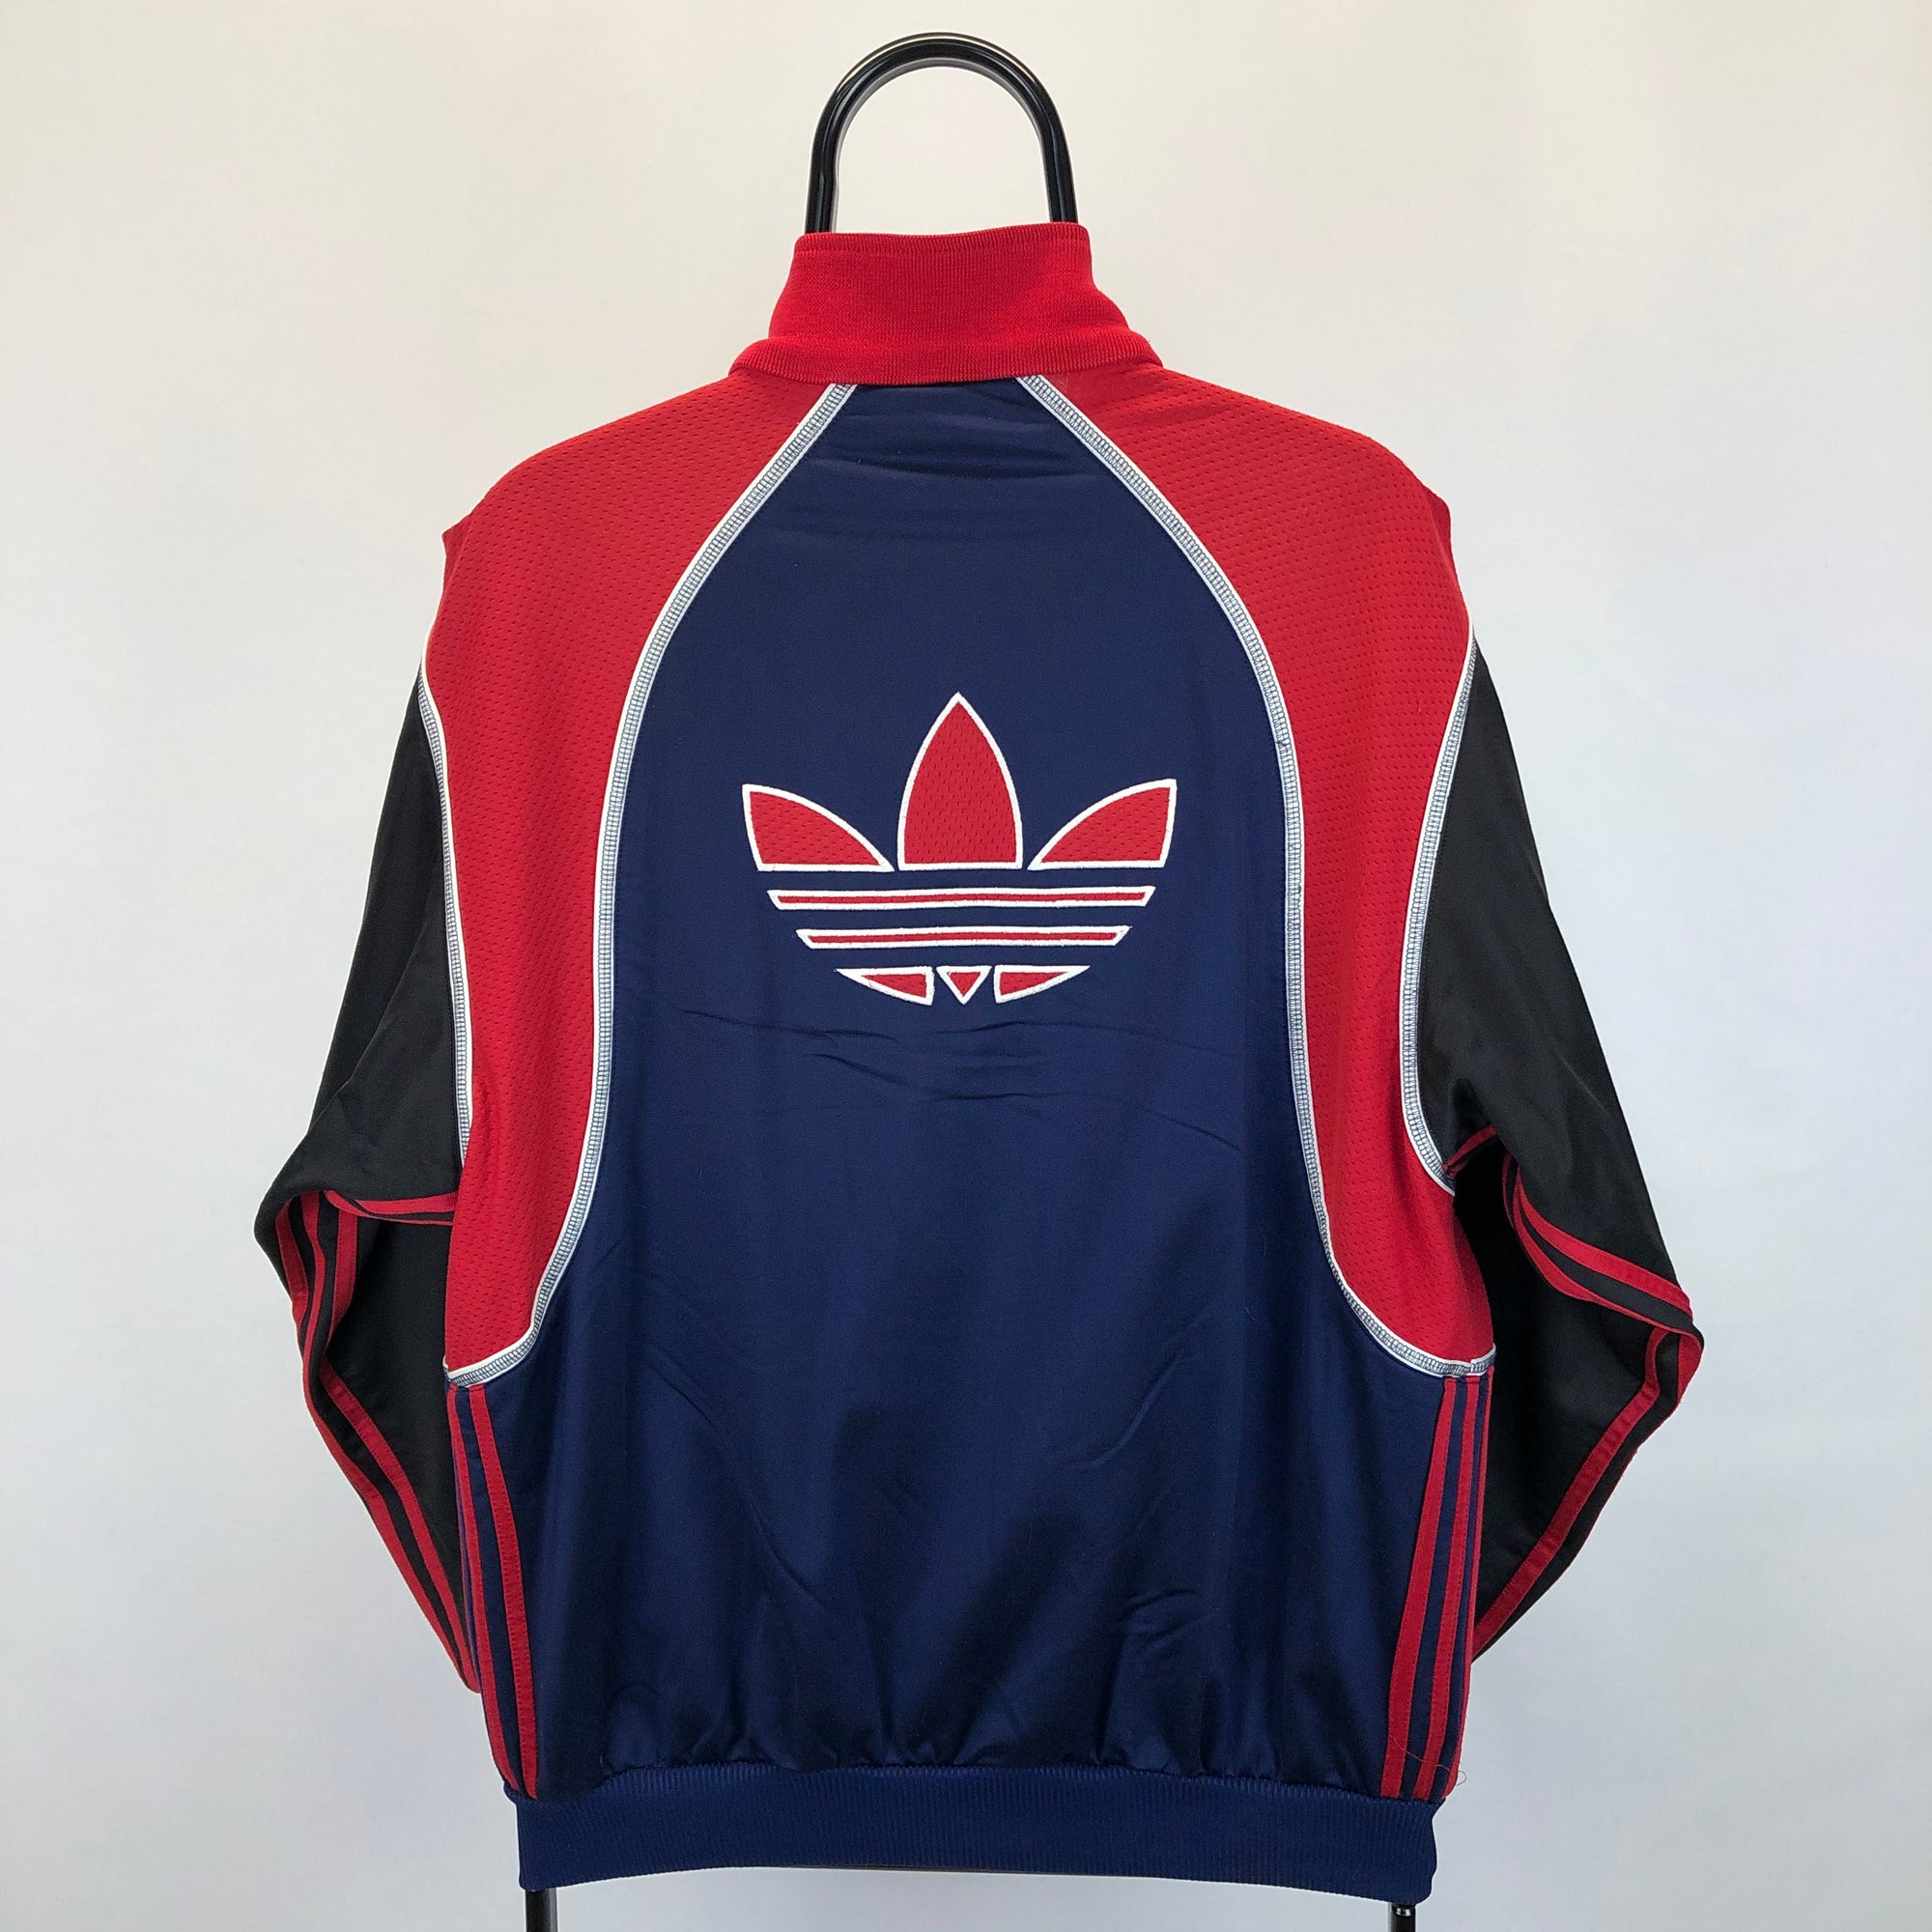 Vintage 80s Adidas Track Jacket in Navy/Red/Black - Men's Medium/Women's Large